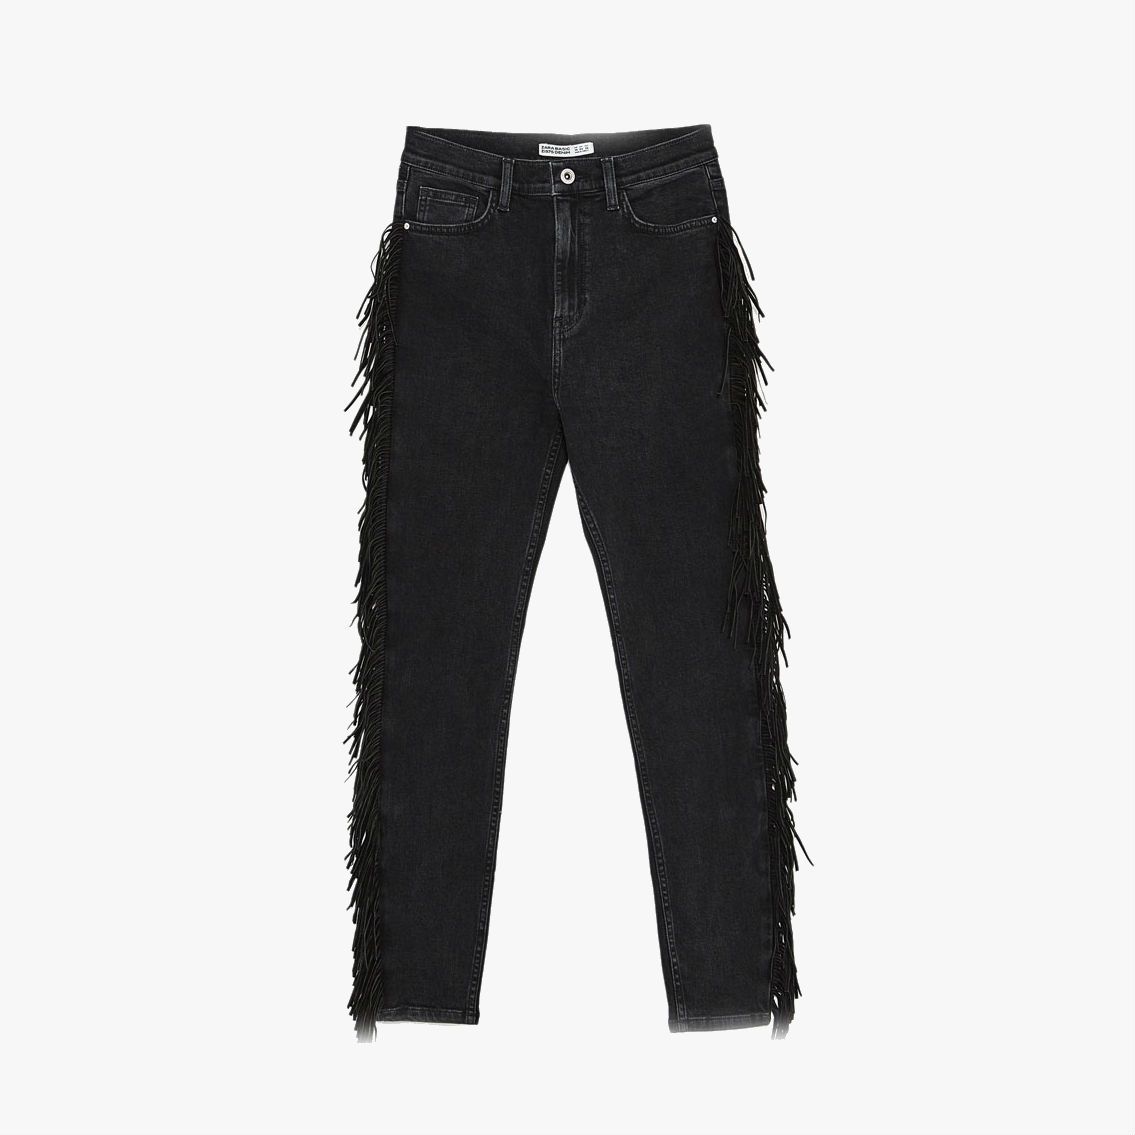 Black high-waisted jeans with black fringe on sides.